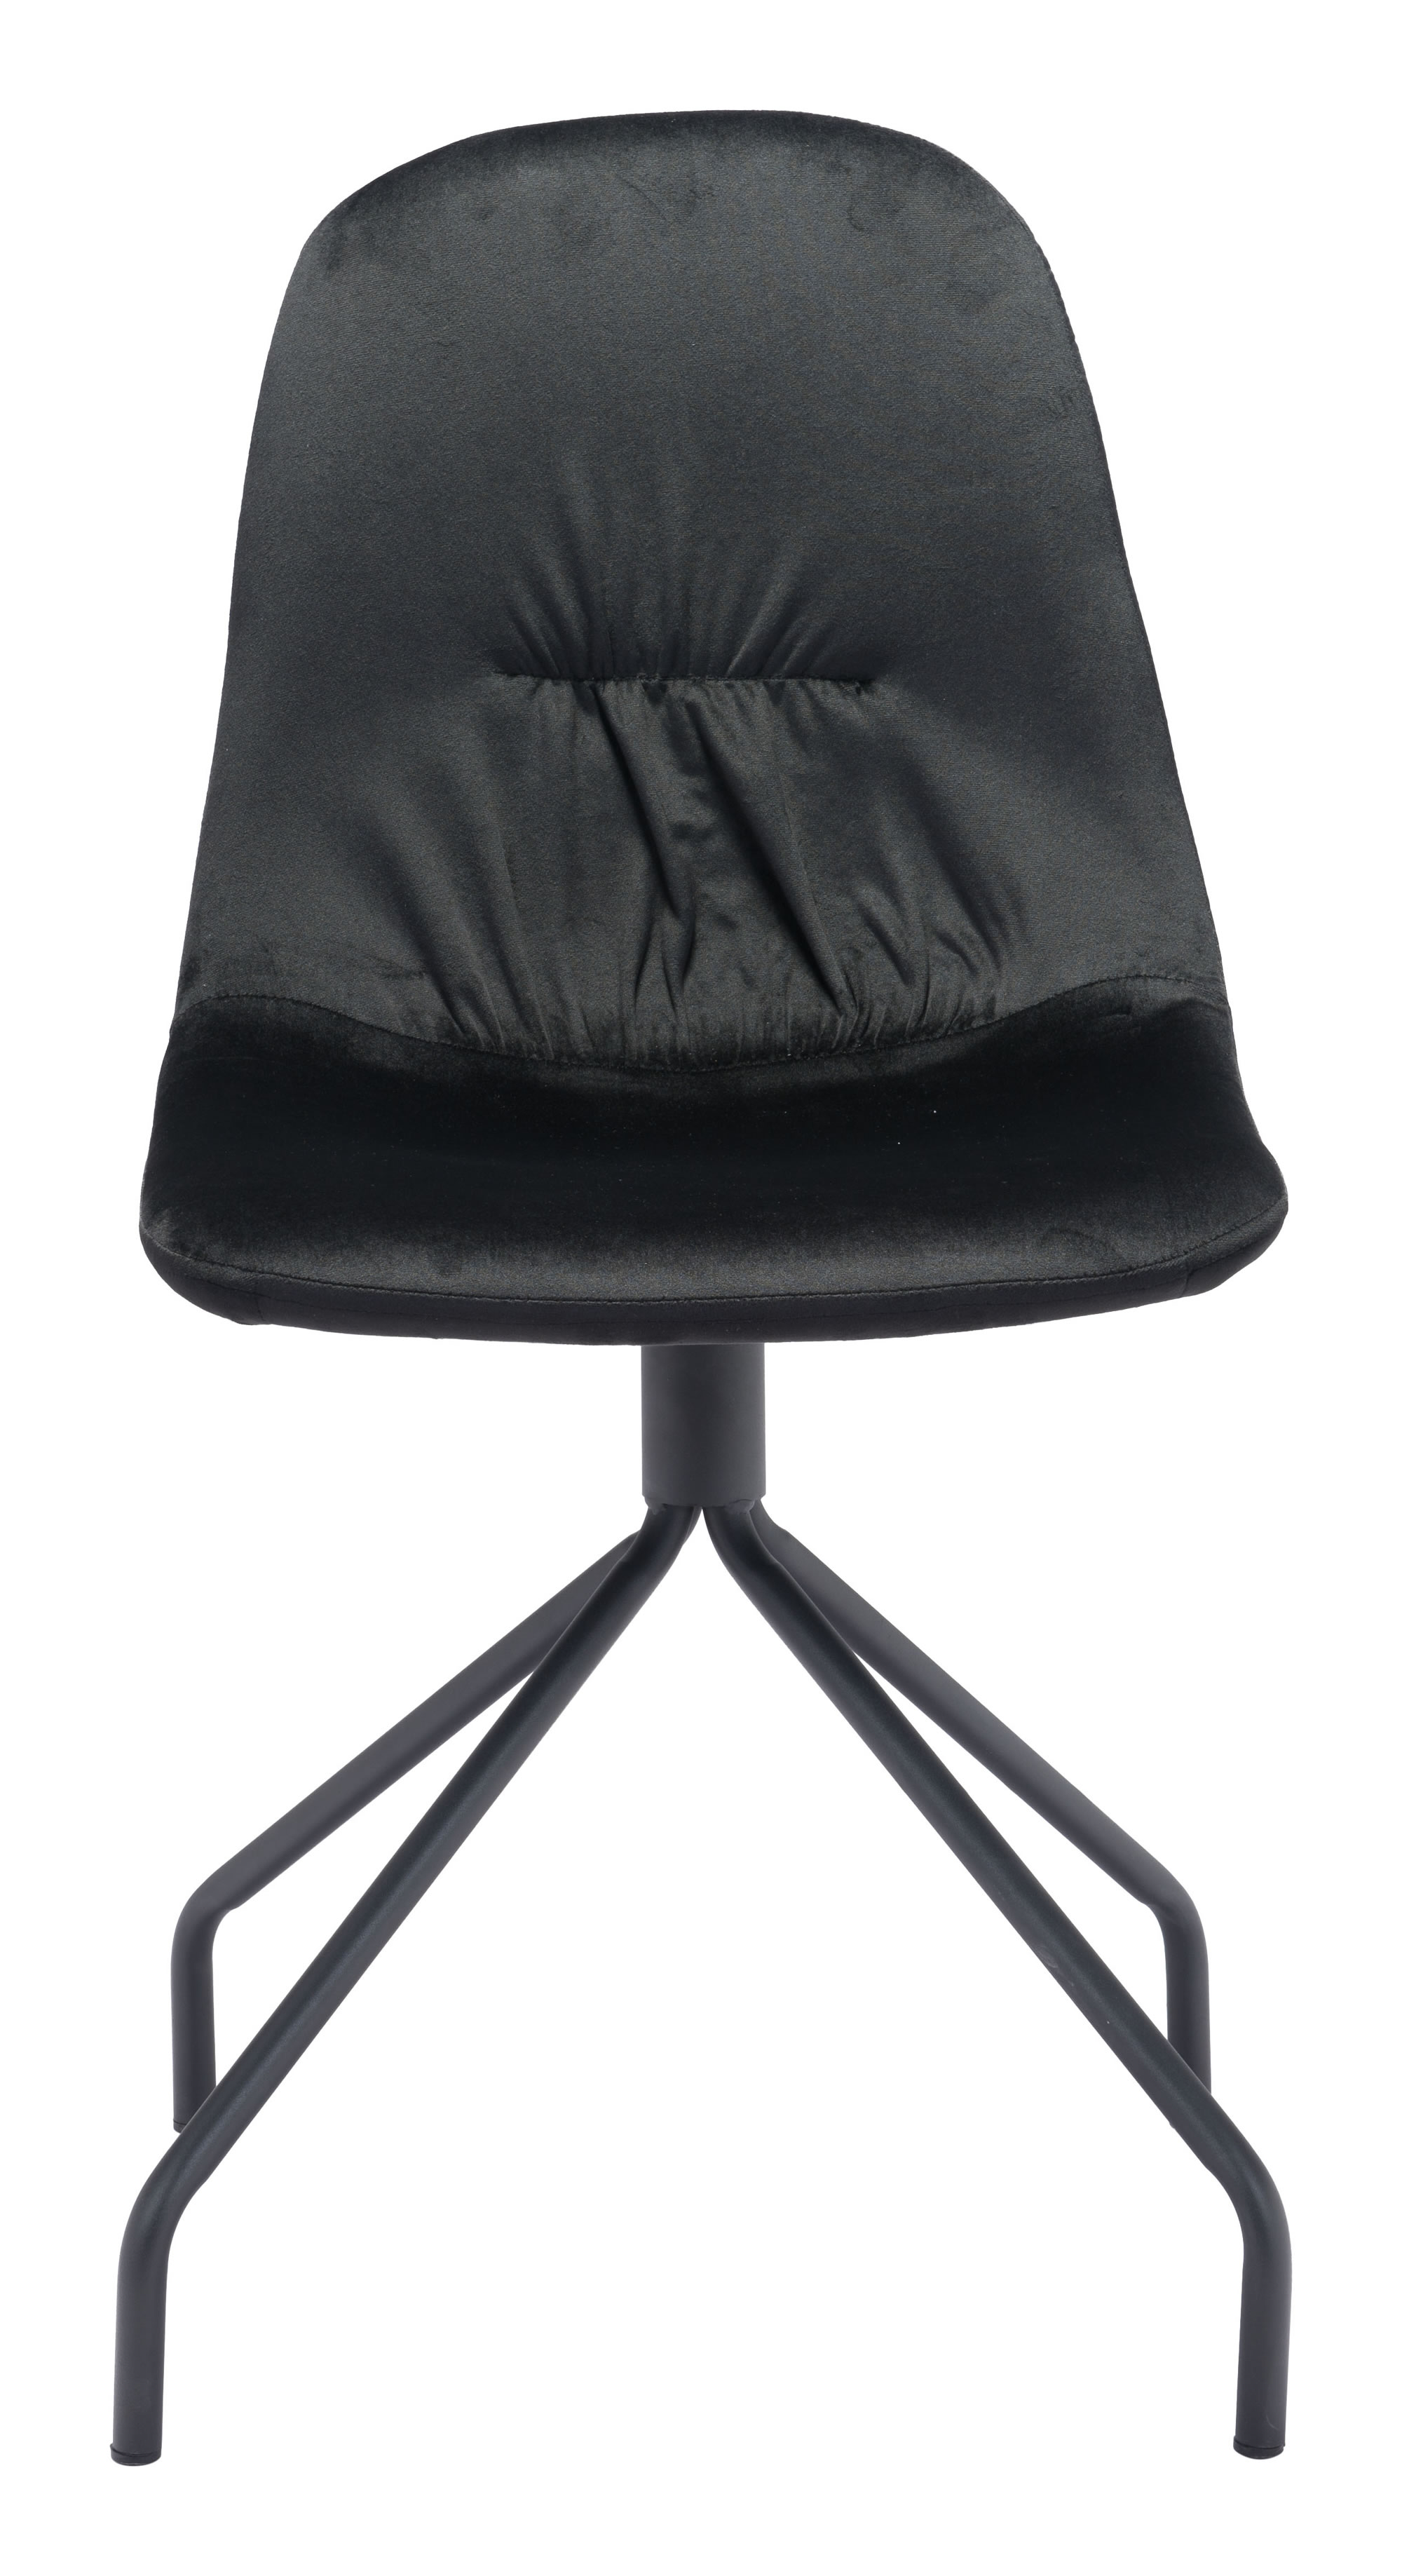 17.7" x 20.9" x 33.9" Black, Velvet, Steel & Plywood, Chair - Set of 2